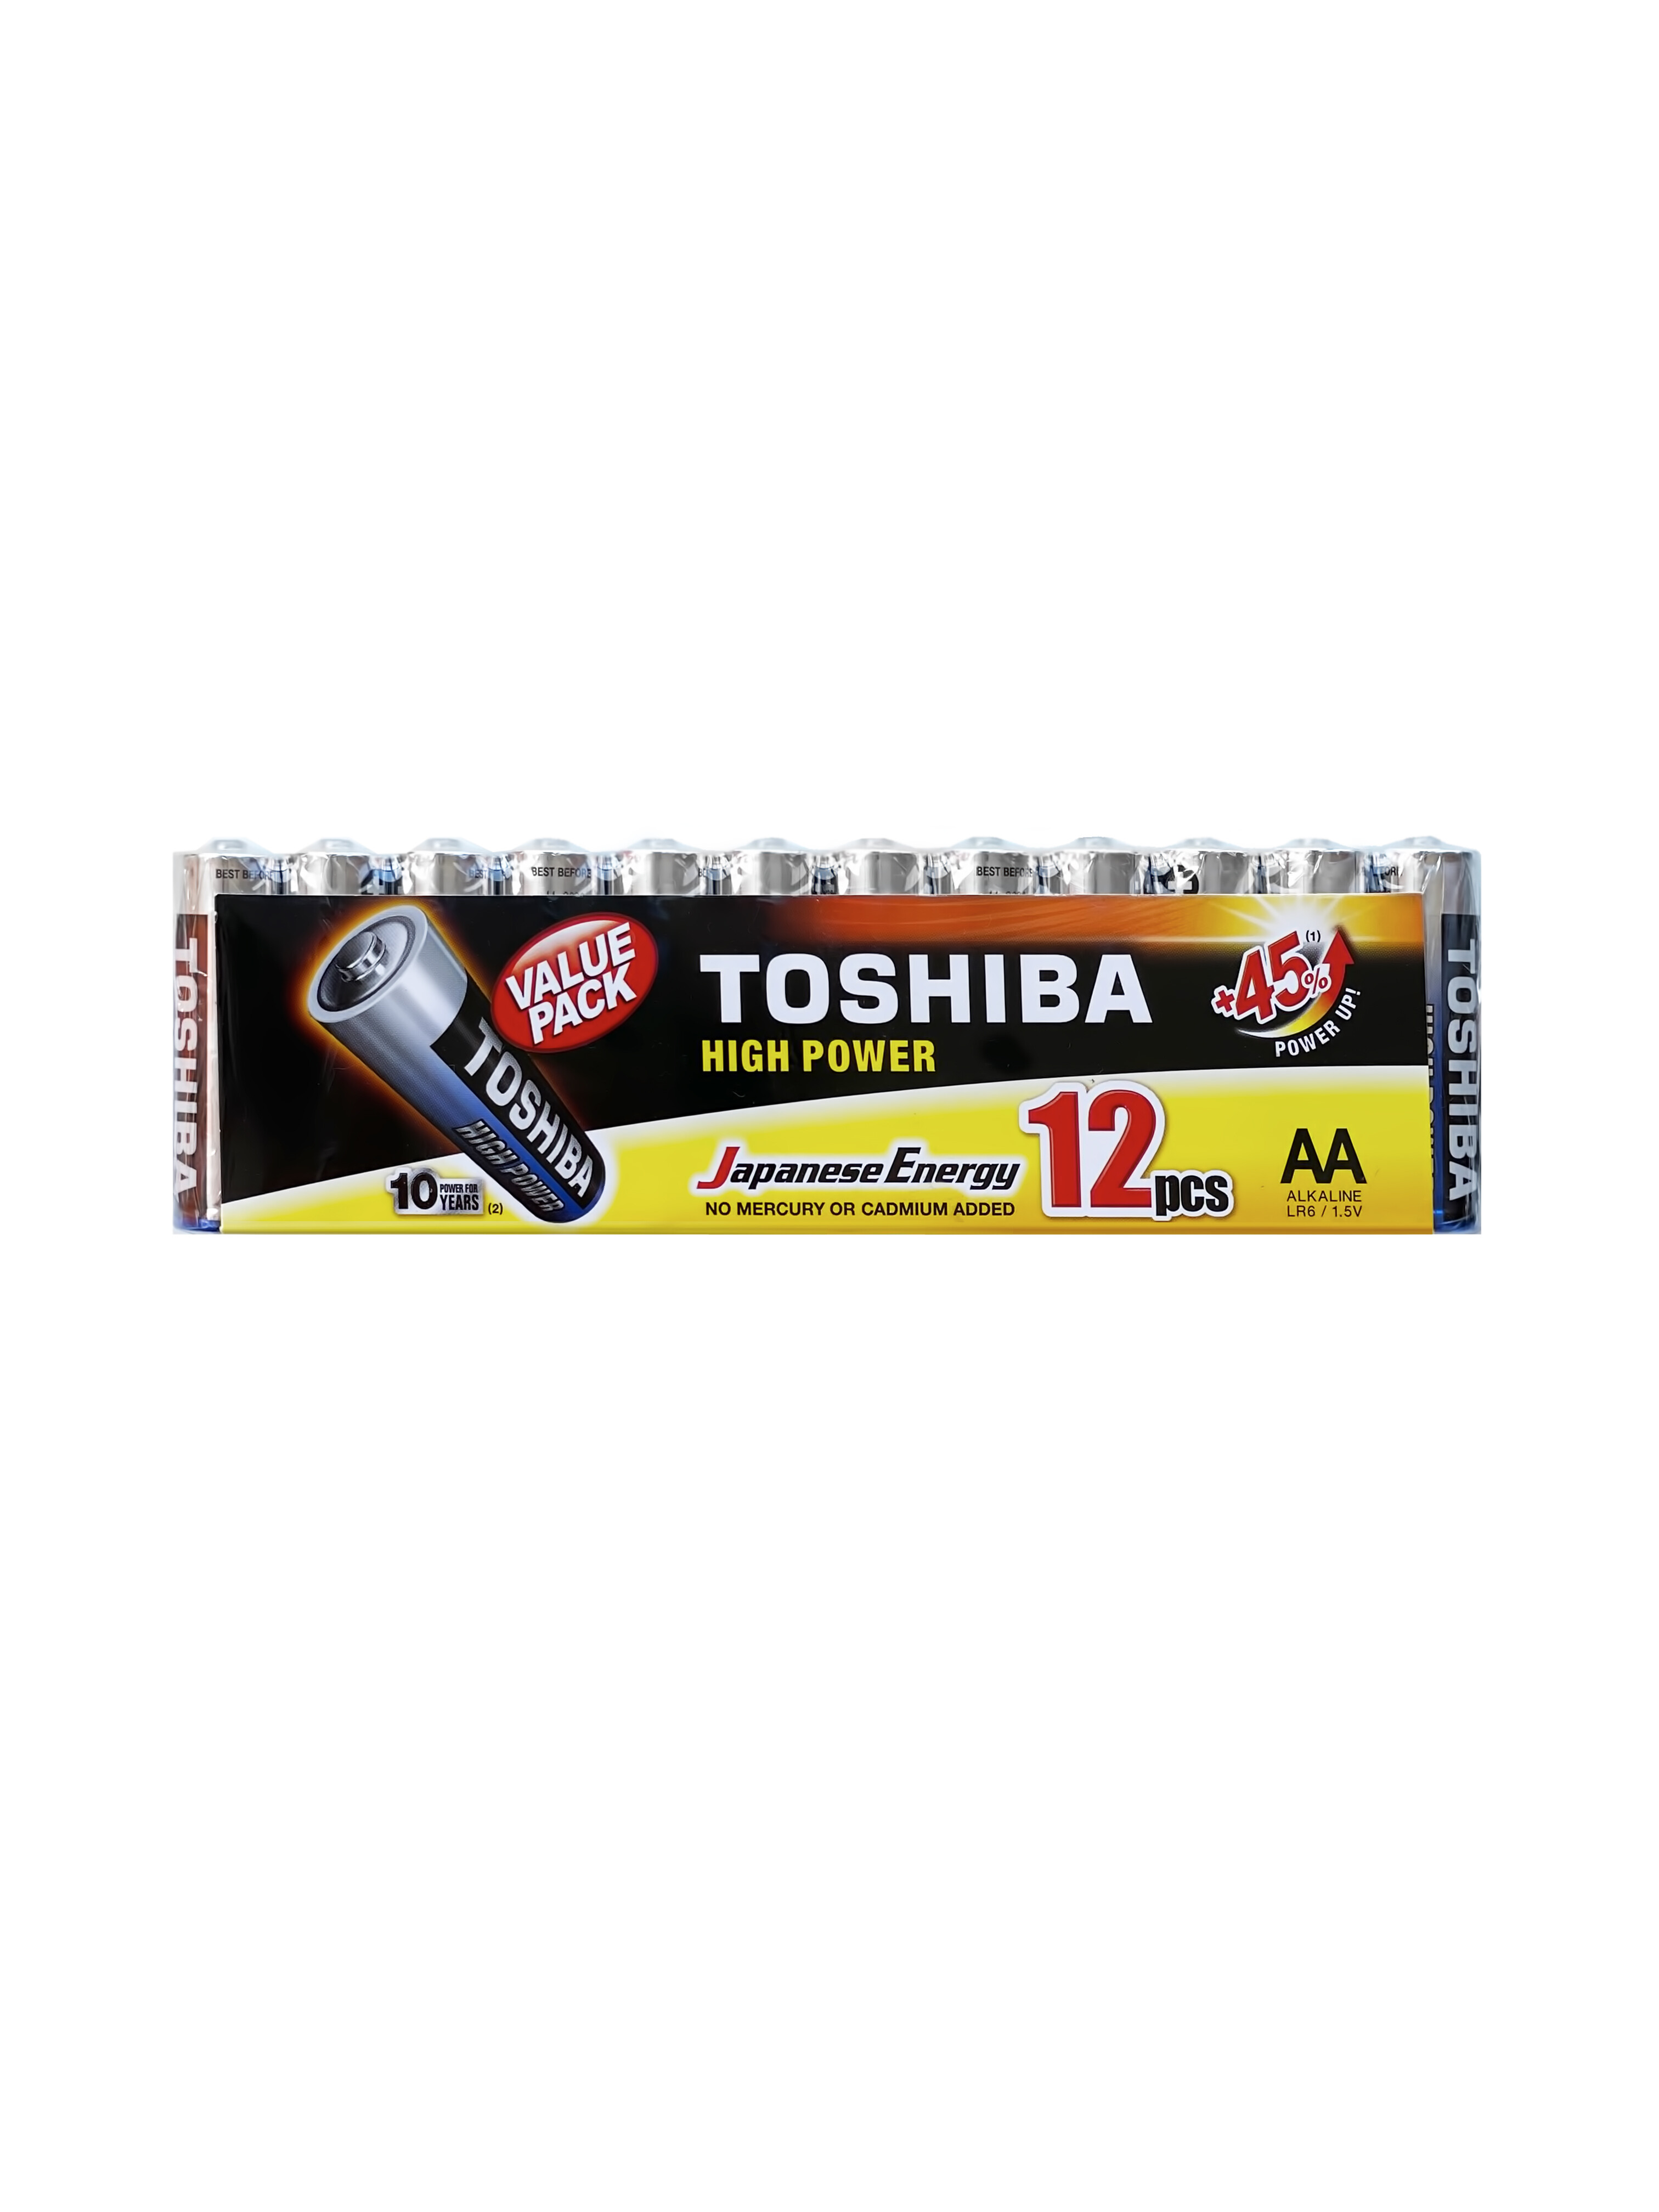 Батарейки Toshiba LR6 щелочные (alkaline) ПАЛЬЧИК High Power (12шт) AA 1,5V батарейки toshiba lr14 щелочные alkaline дюймовочка high power 2шт c 1 5v